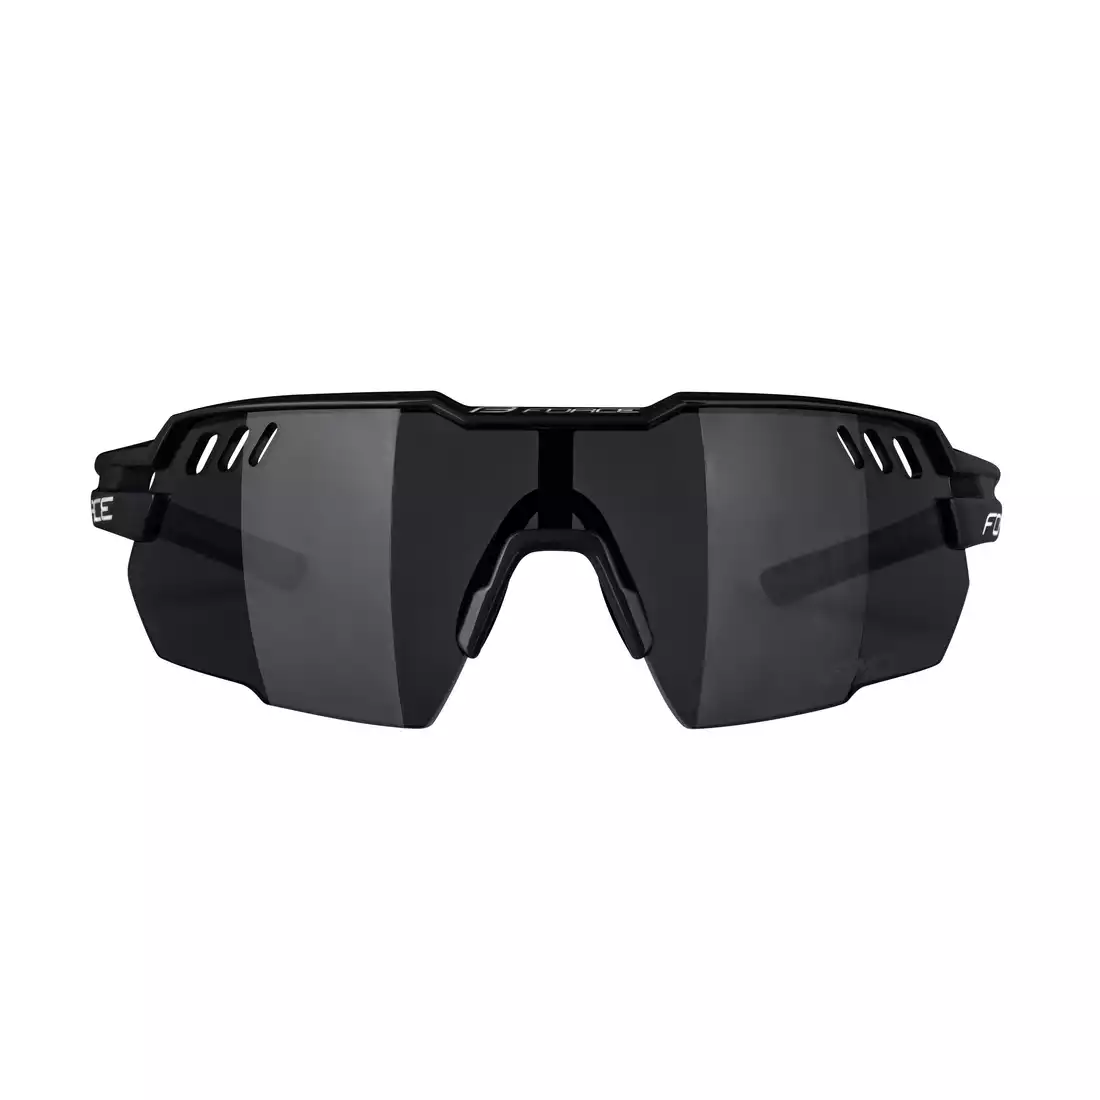 FORCE okulary sportowe AMOLEDO, czarno-szare 910881